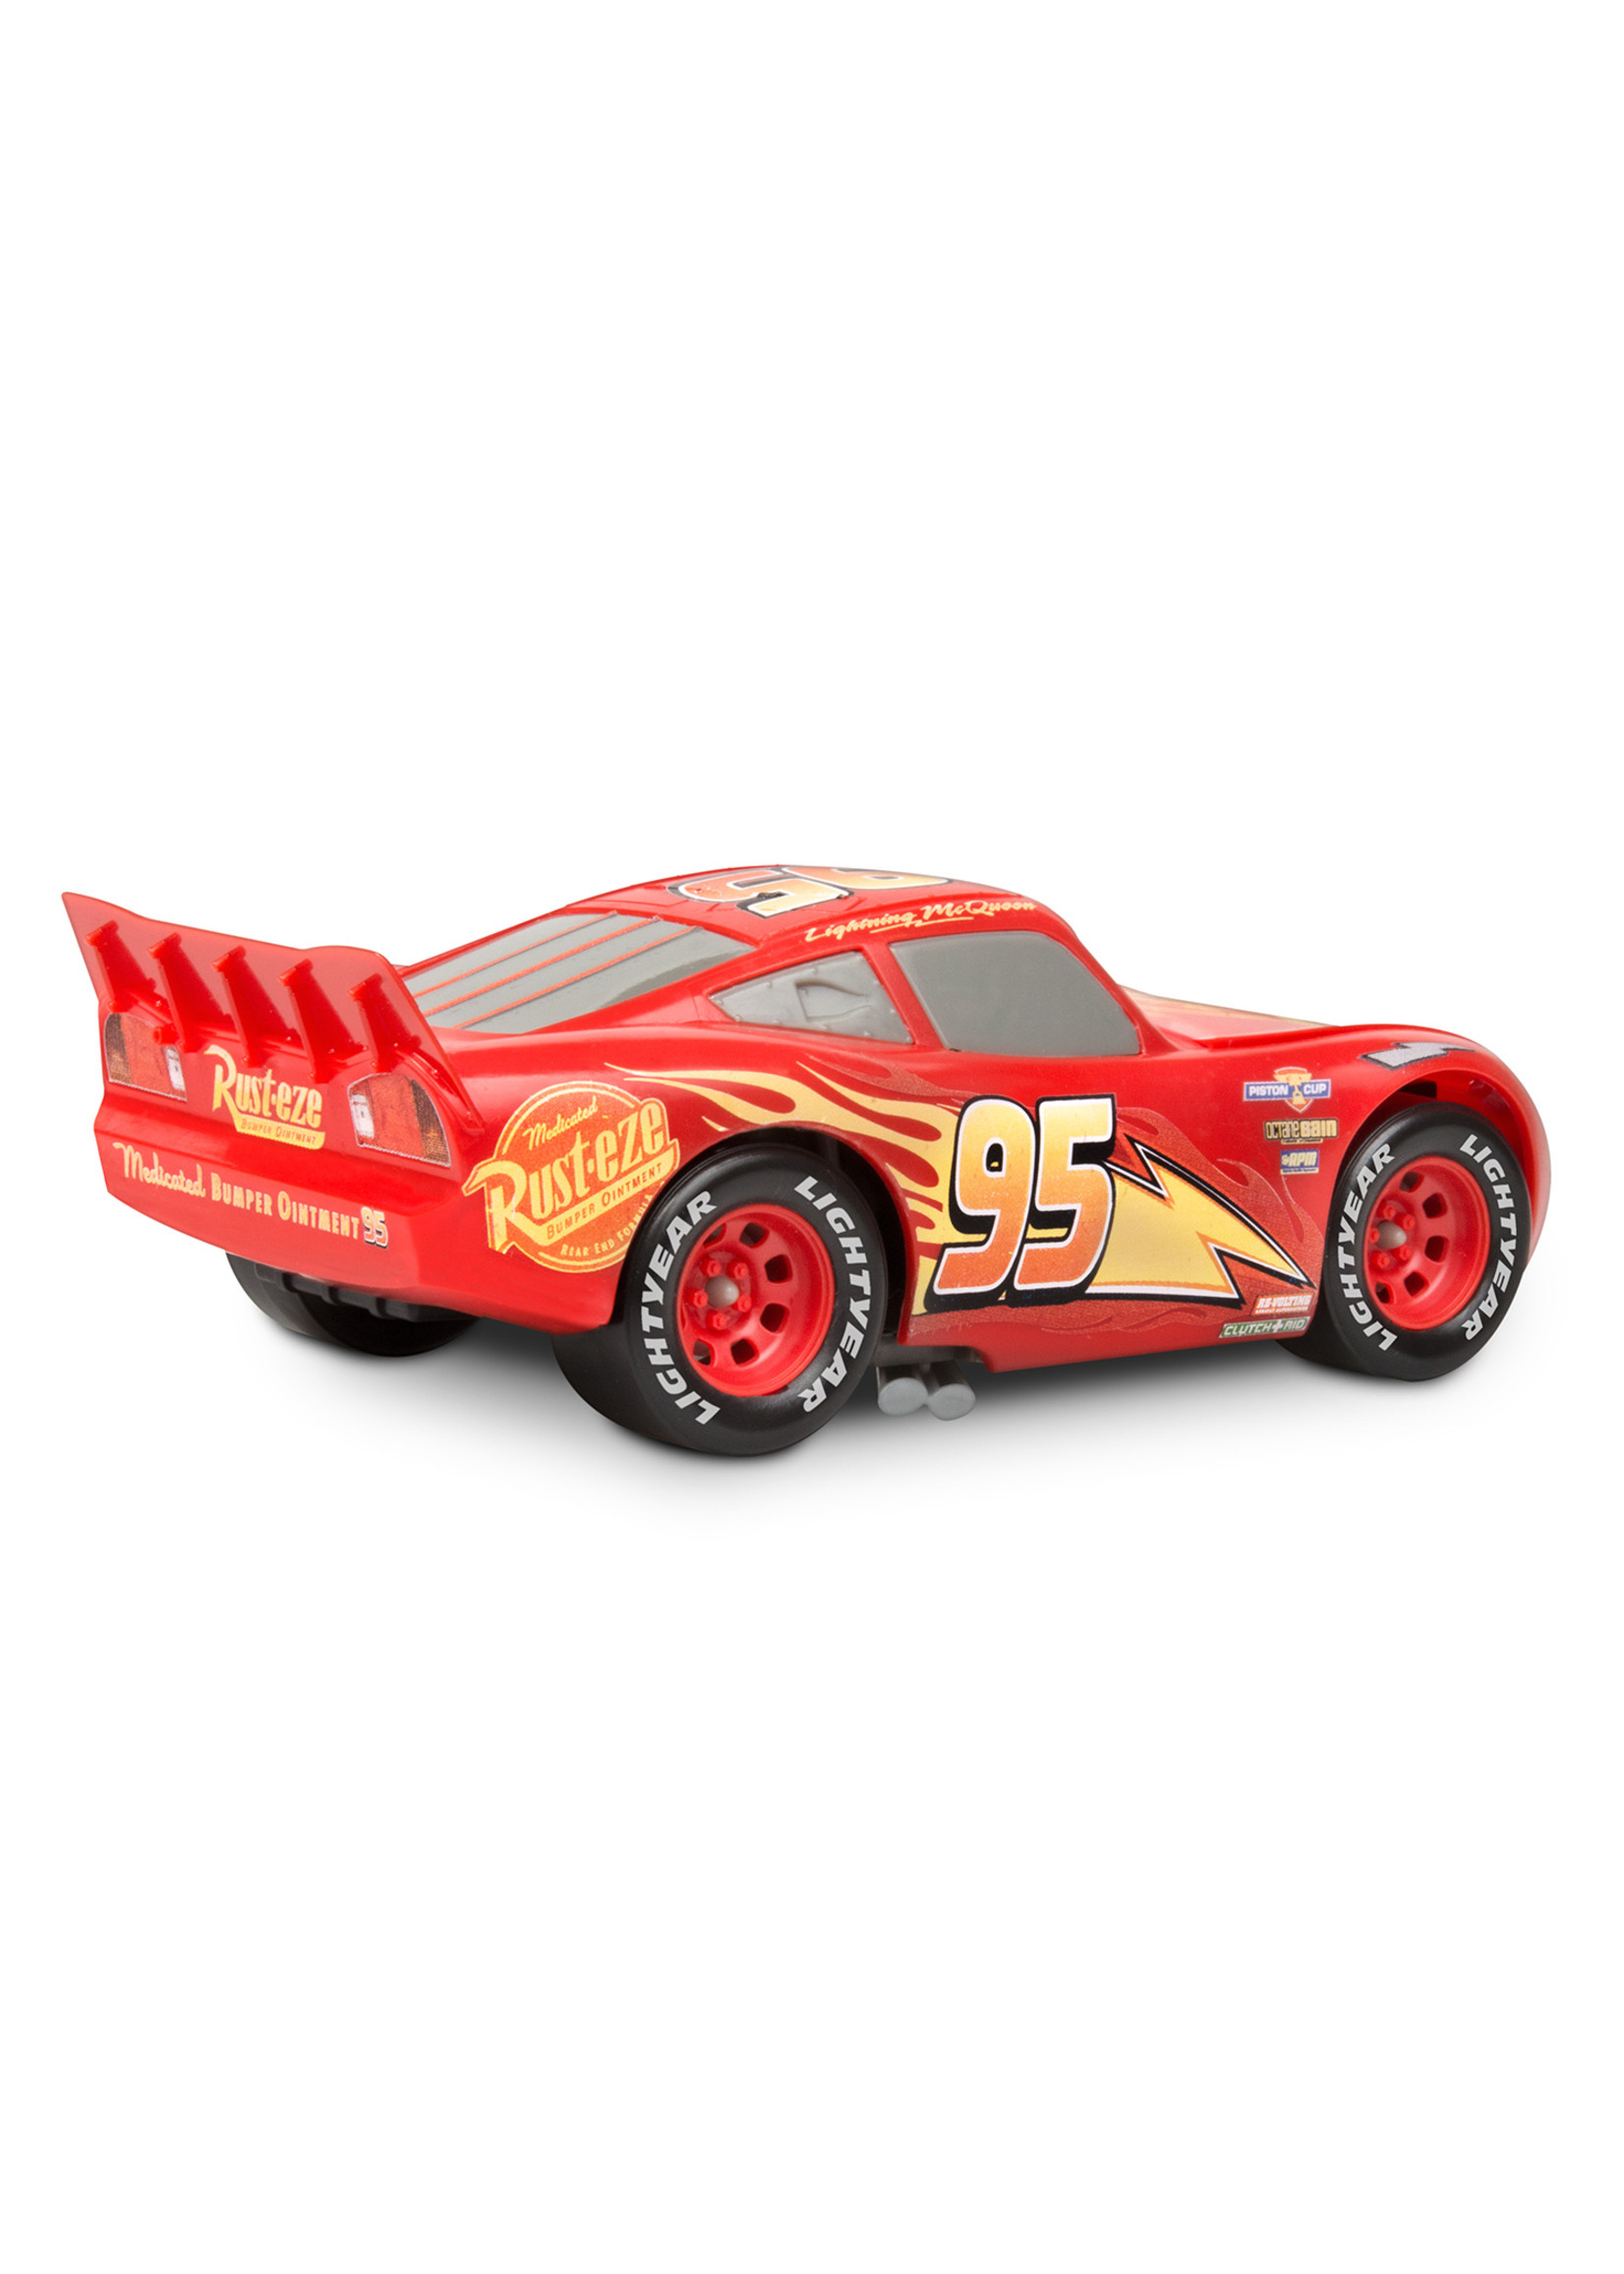 Revell 1988 - 1/24 Disney Cars Lightning McQueen